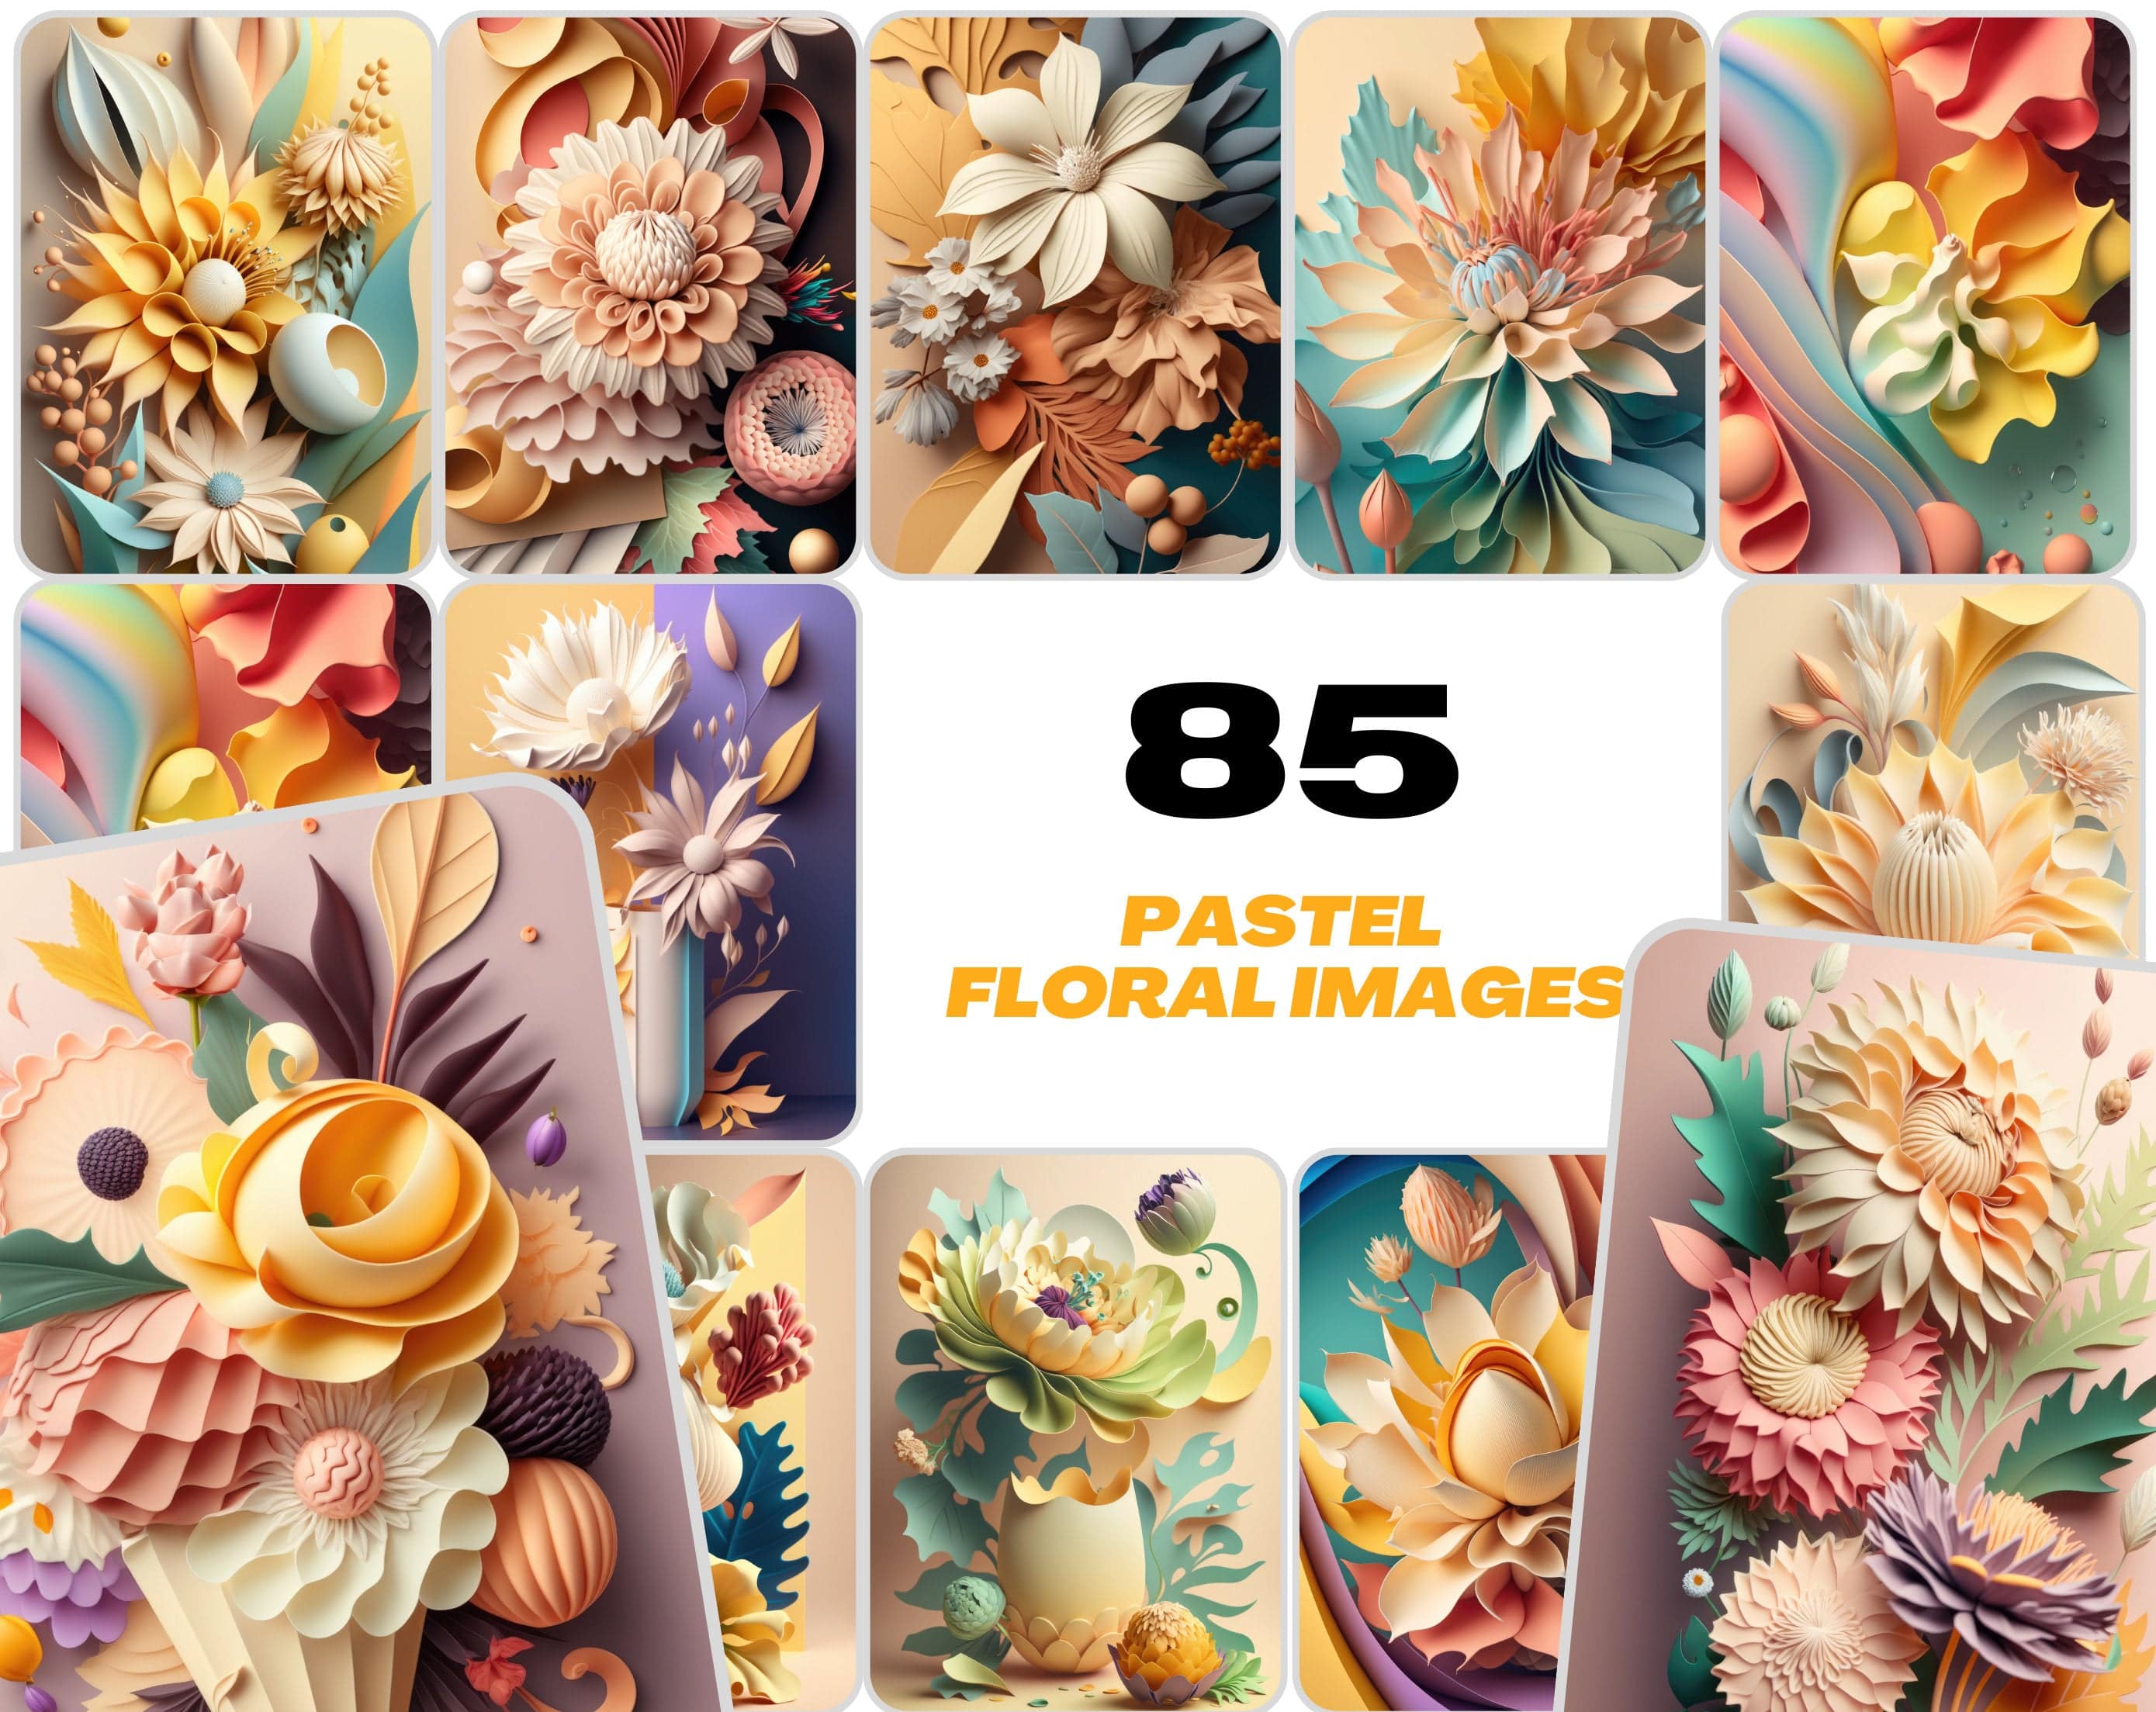 3D Pastel Floral Image Bundle, 85 Printable Artworks, Canvas Wall Art, iPhone Wallpaper, Digital Download Digital Download Sumobundle